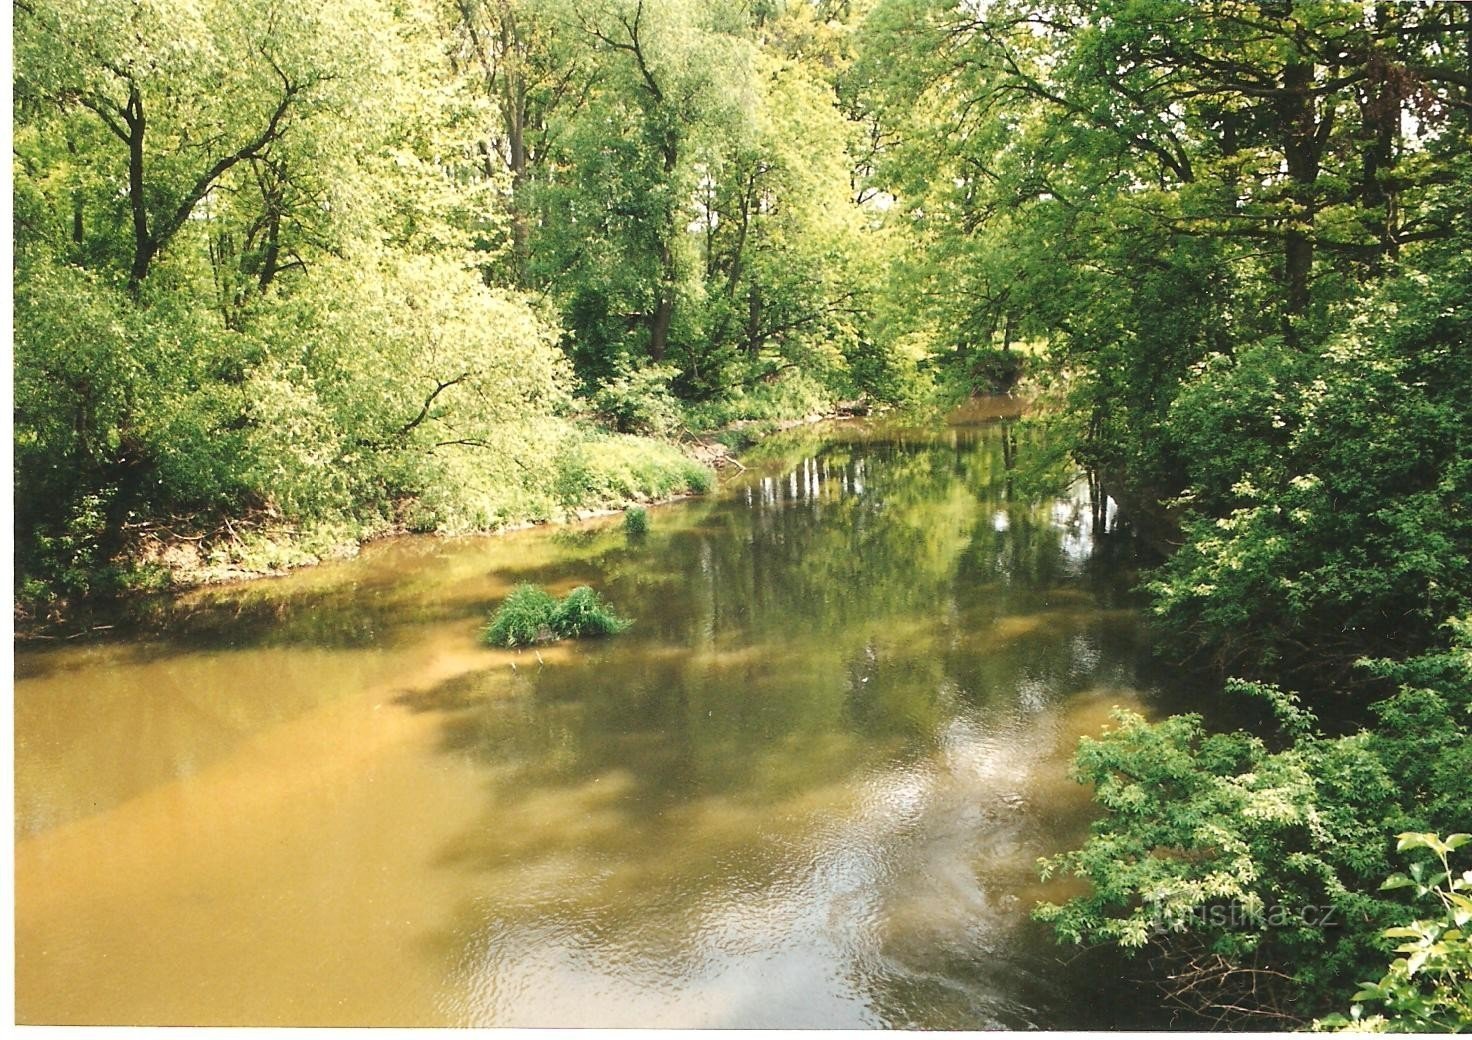 Basen wodny Včelínek w lesie łęgowym